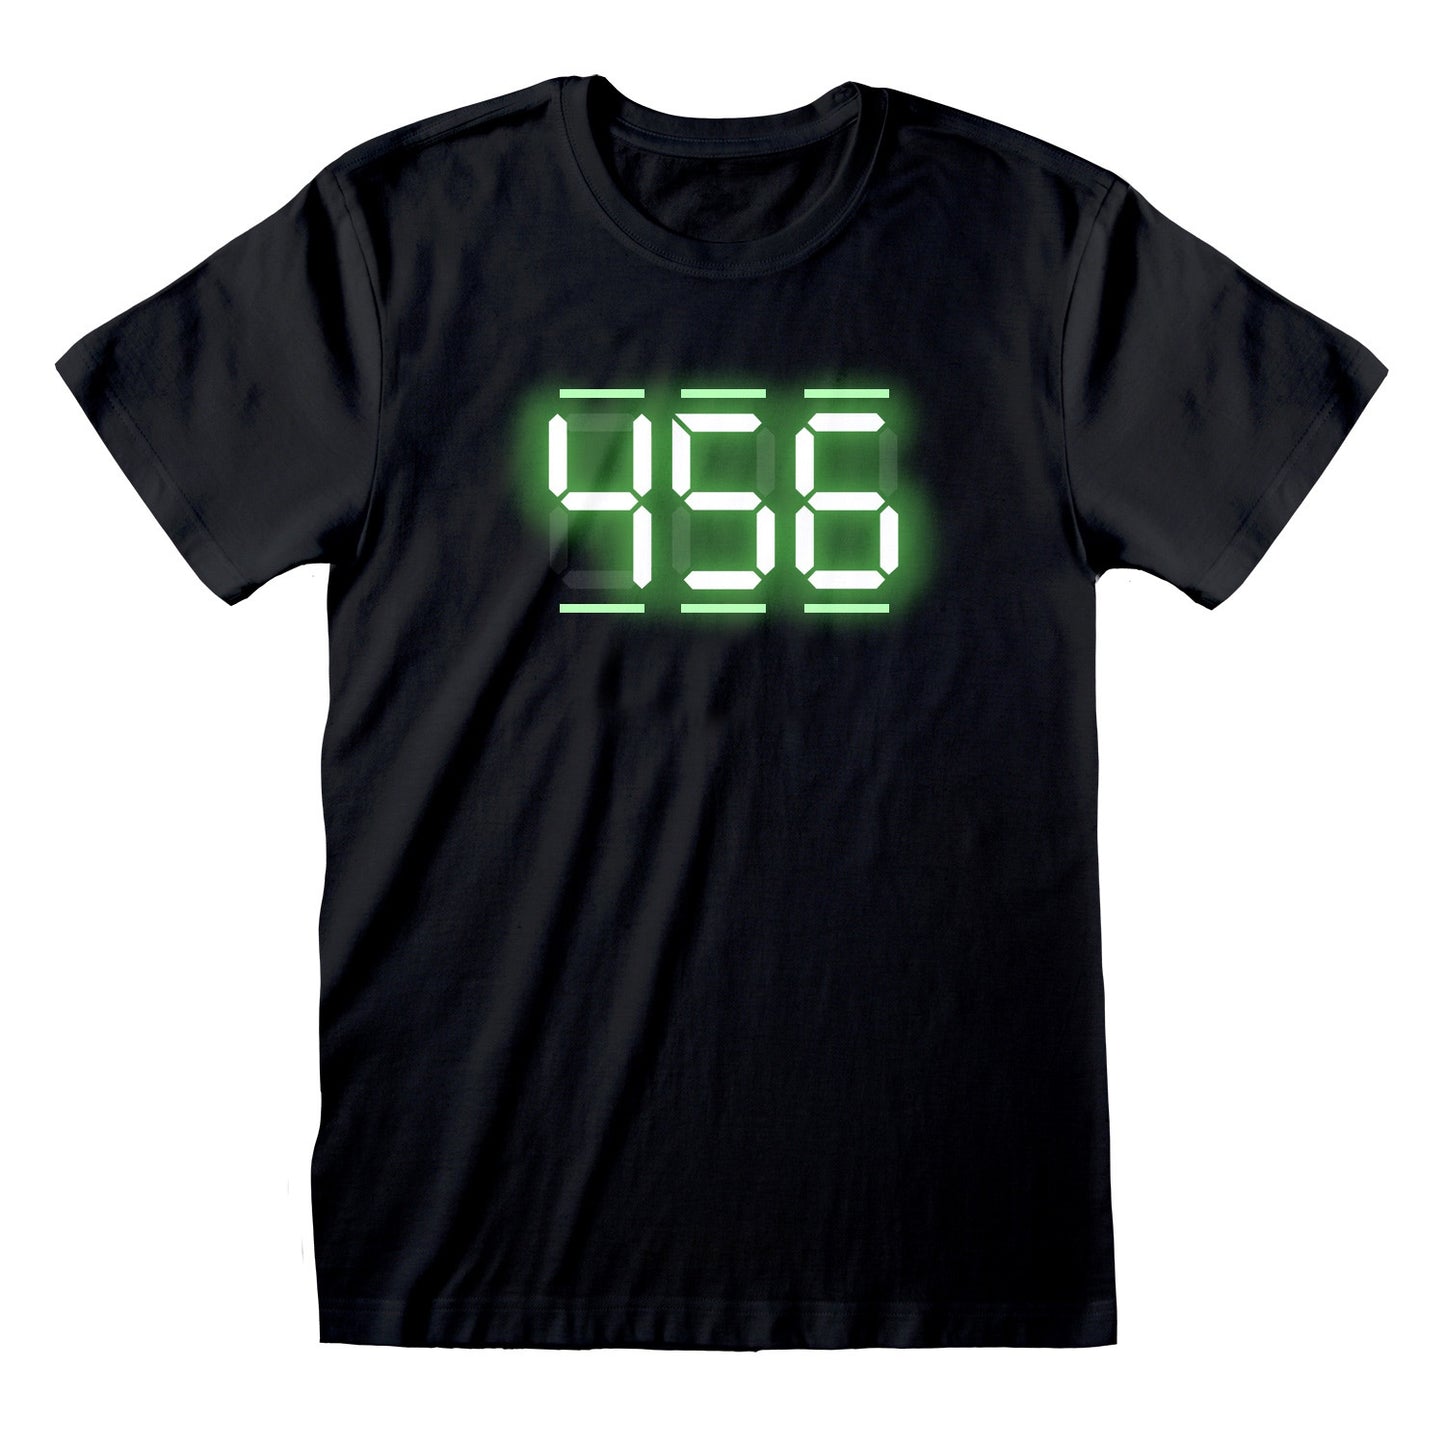 SQUID GAME - 456 Digital Text T-Shirt